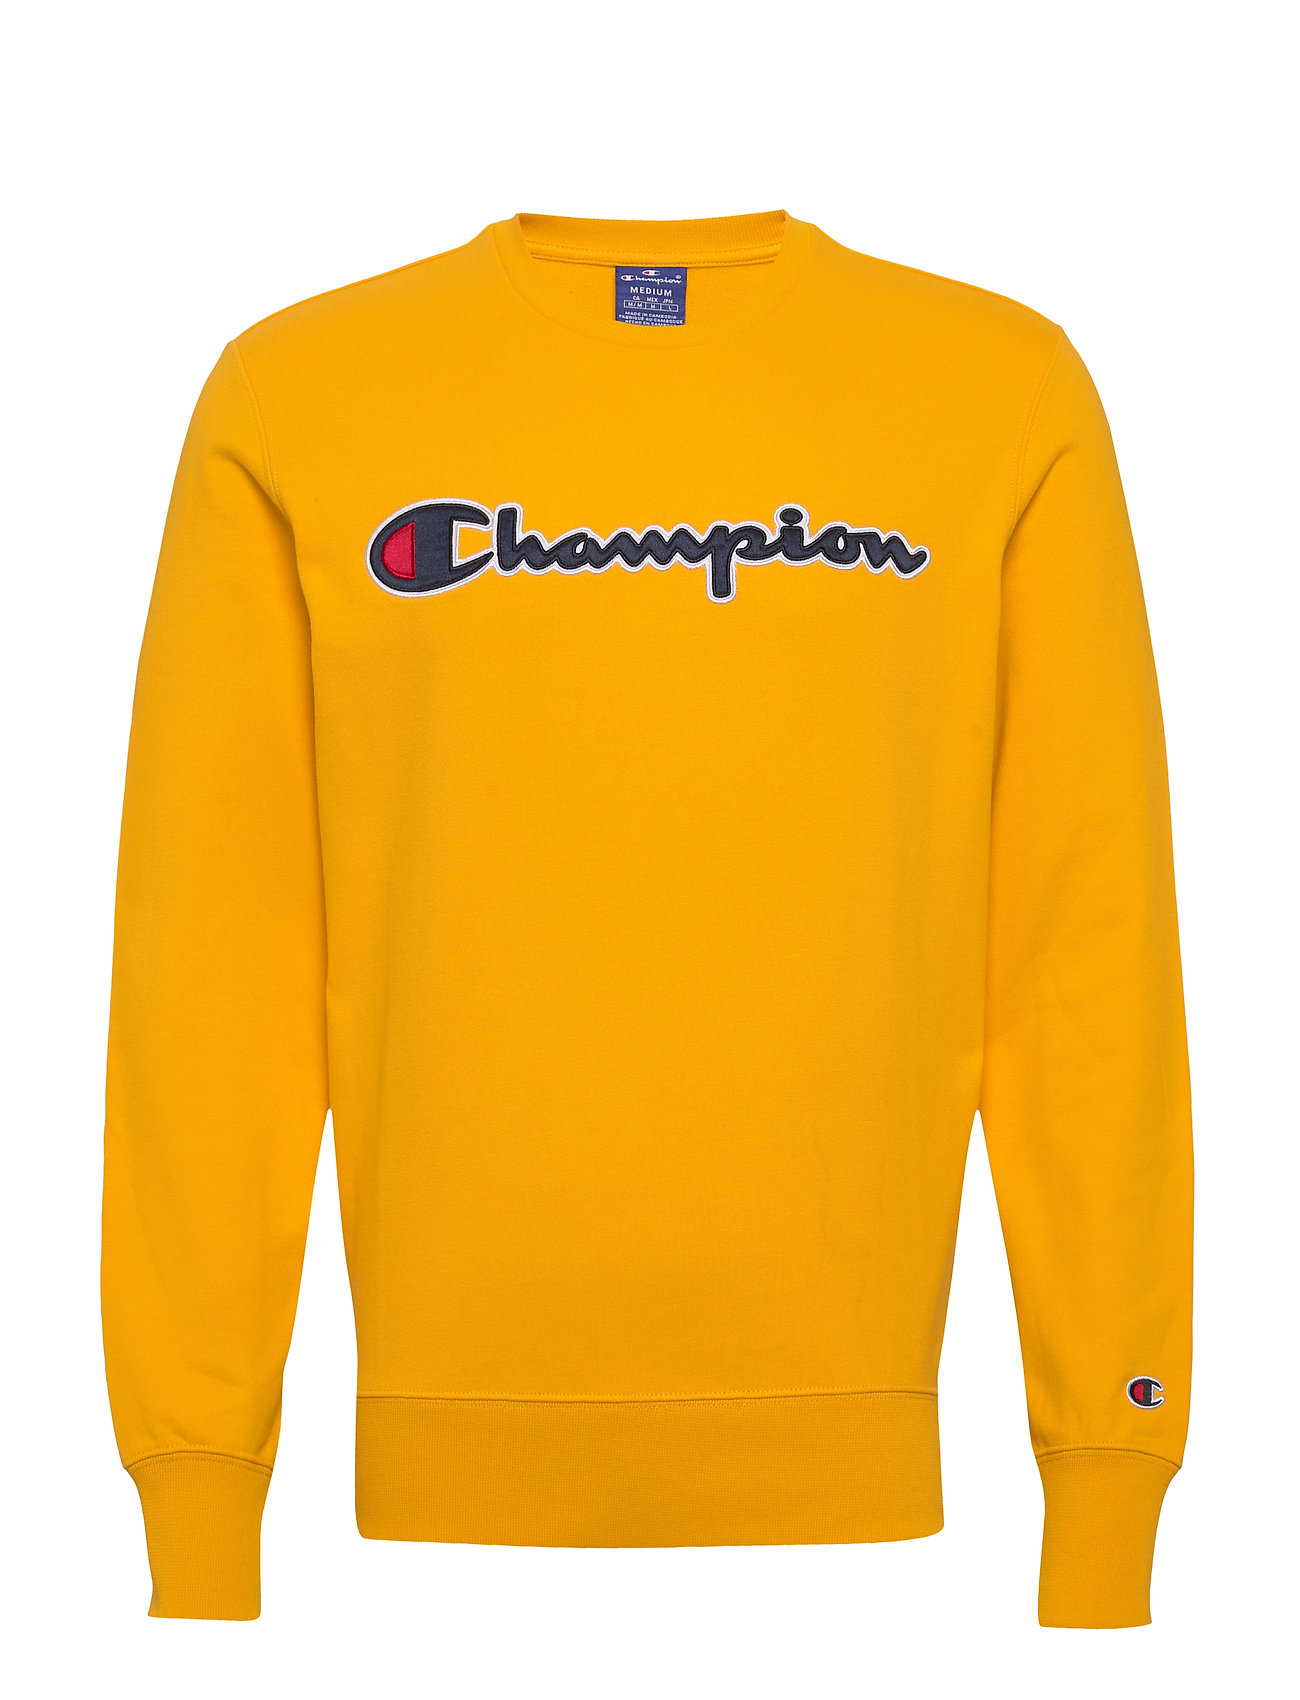 yellow crew neck champion sweatshirt